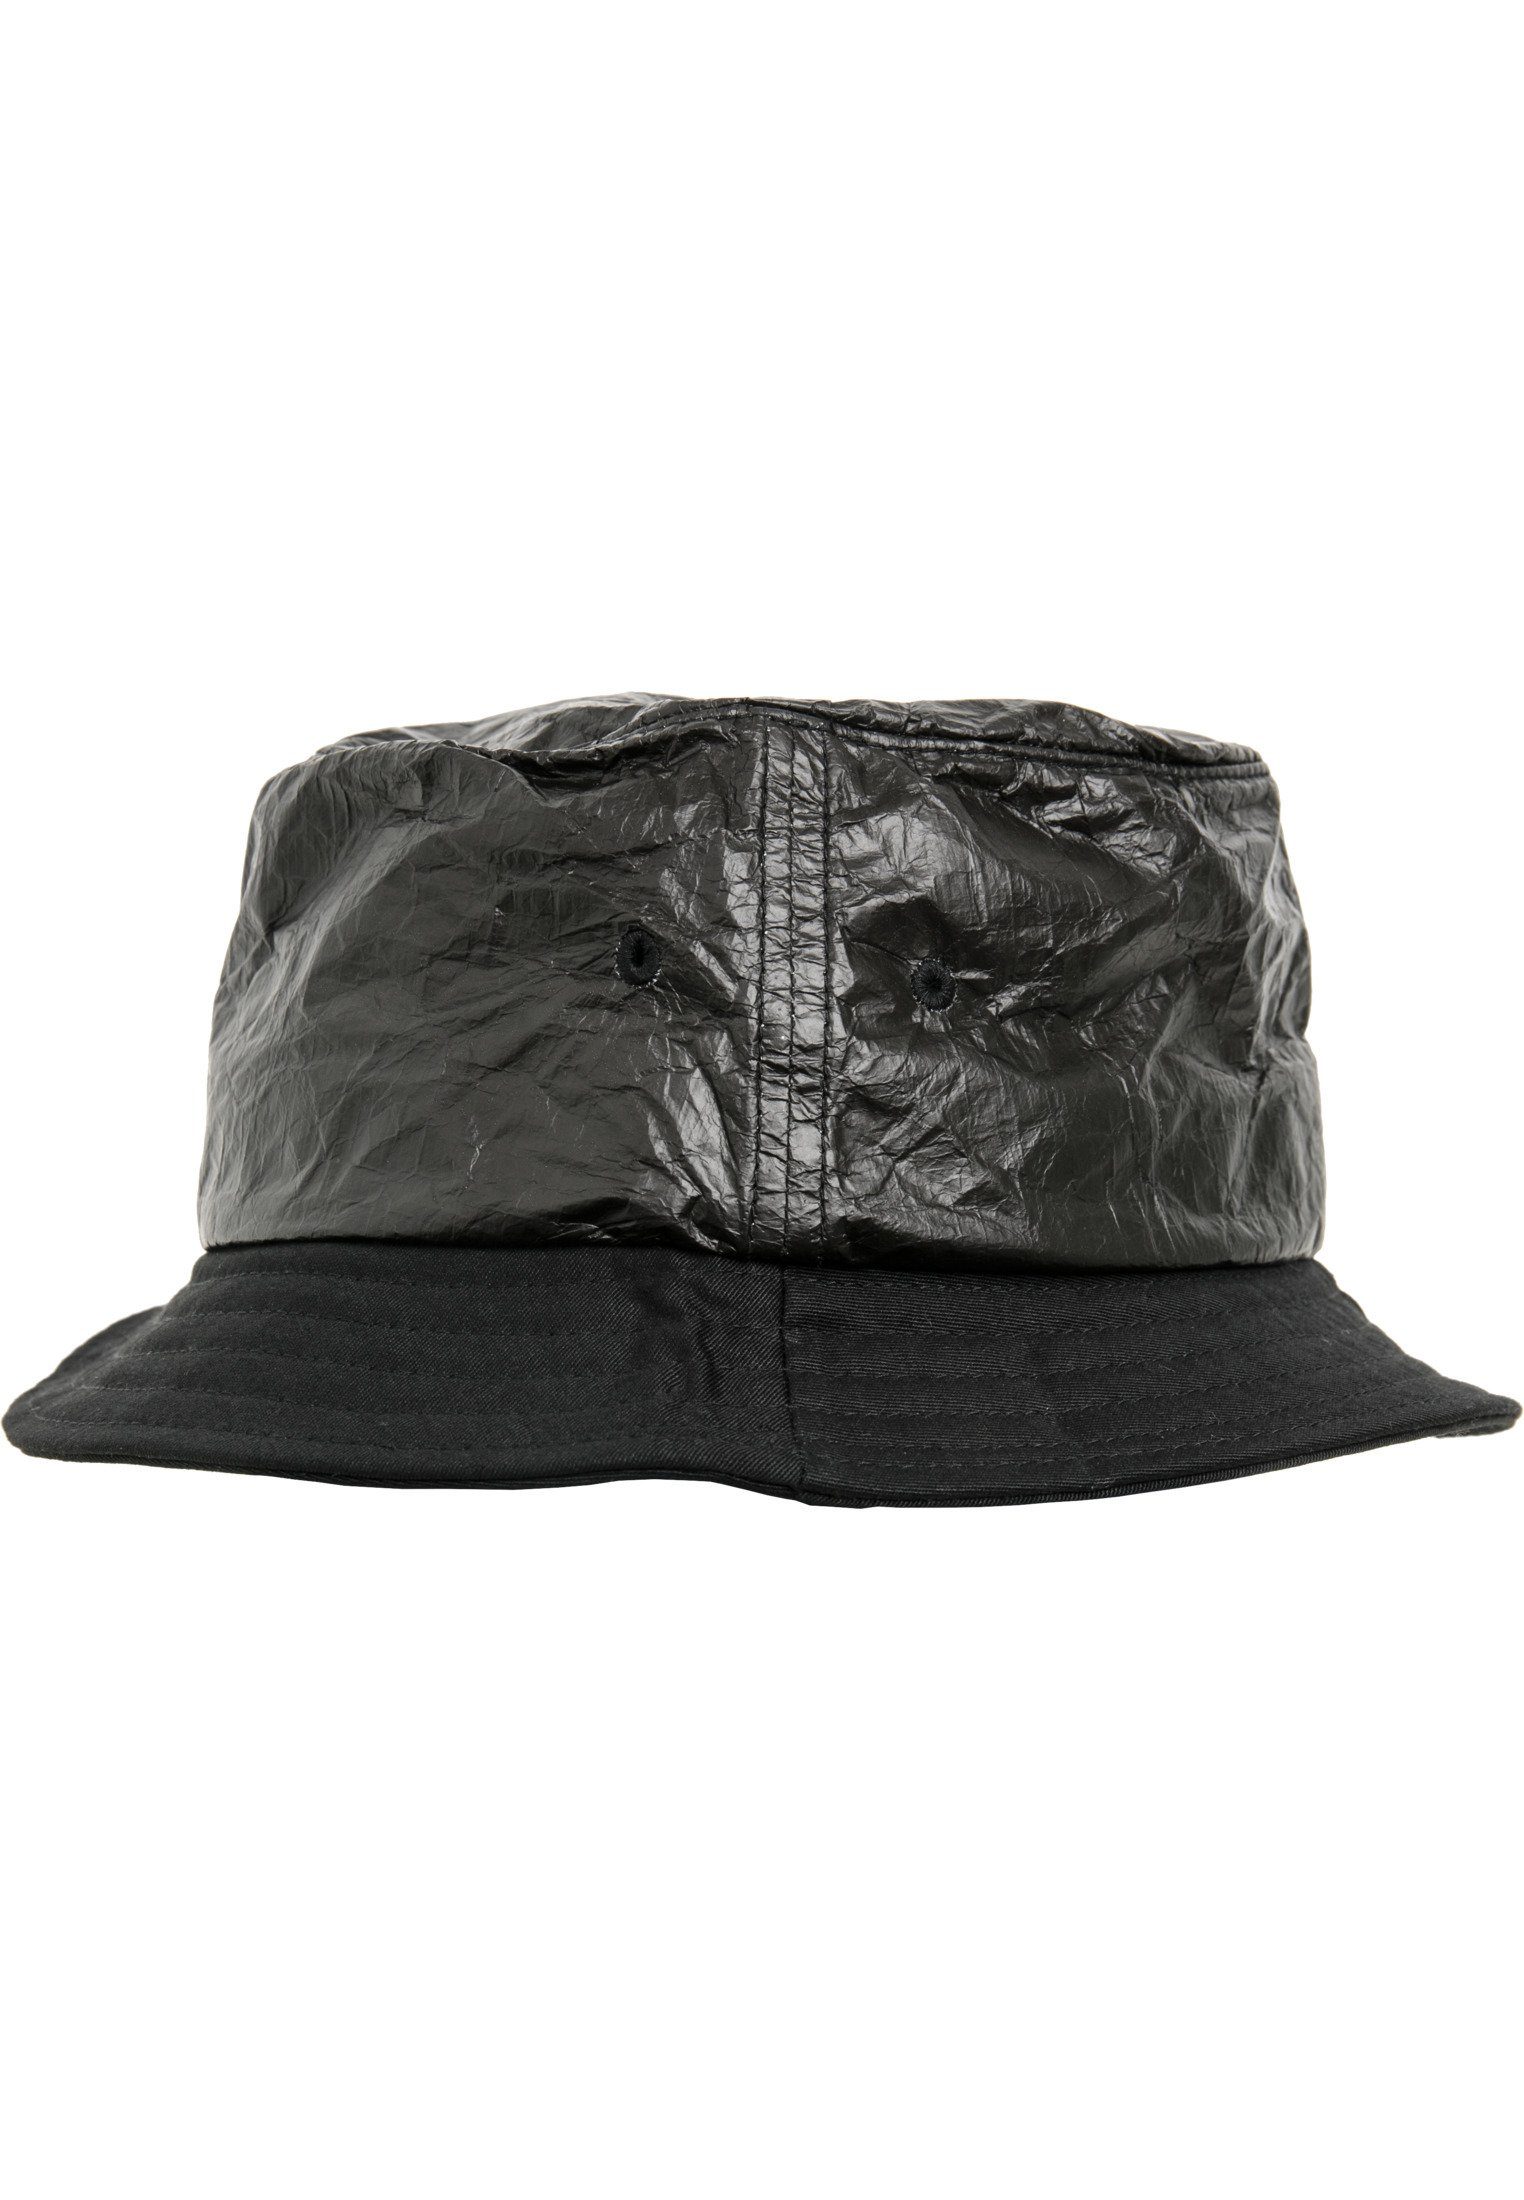 Cap Bucket Hat Hat Bucket black Flexfit Flex Paper Crinkled